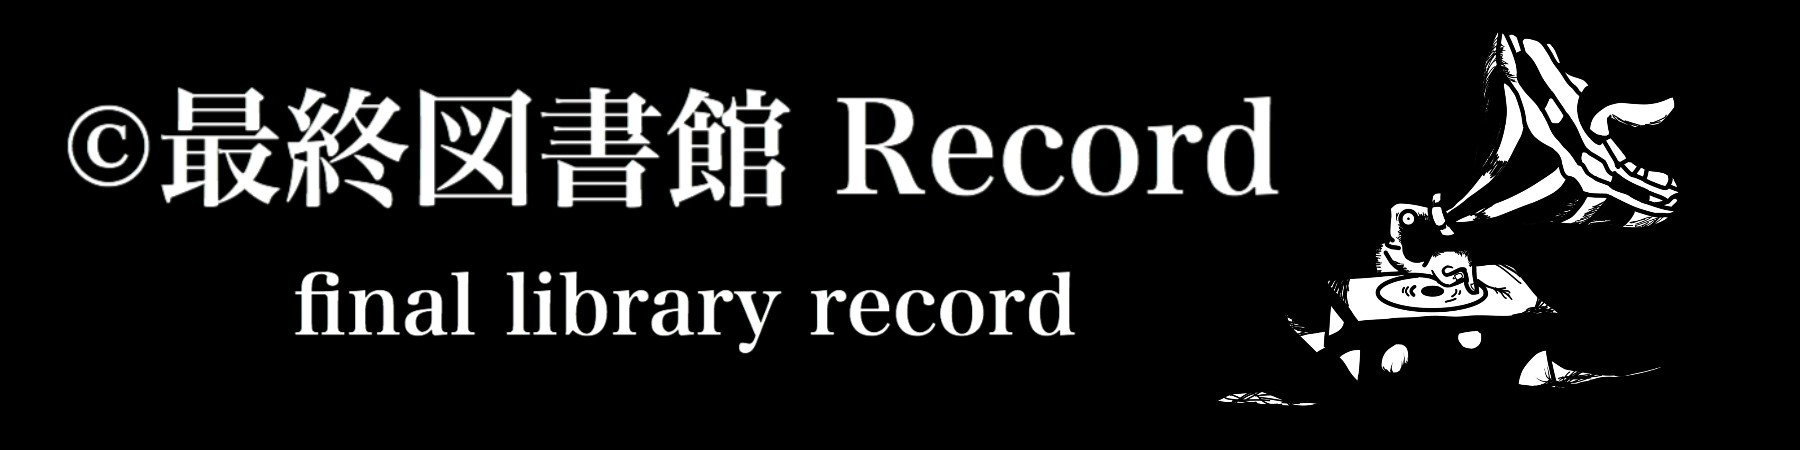 final liblary record